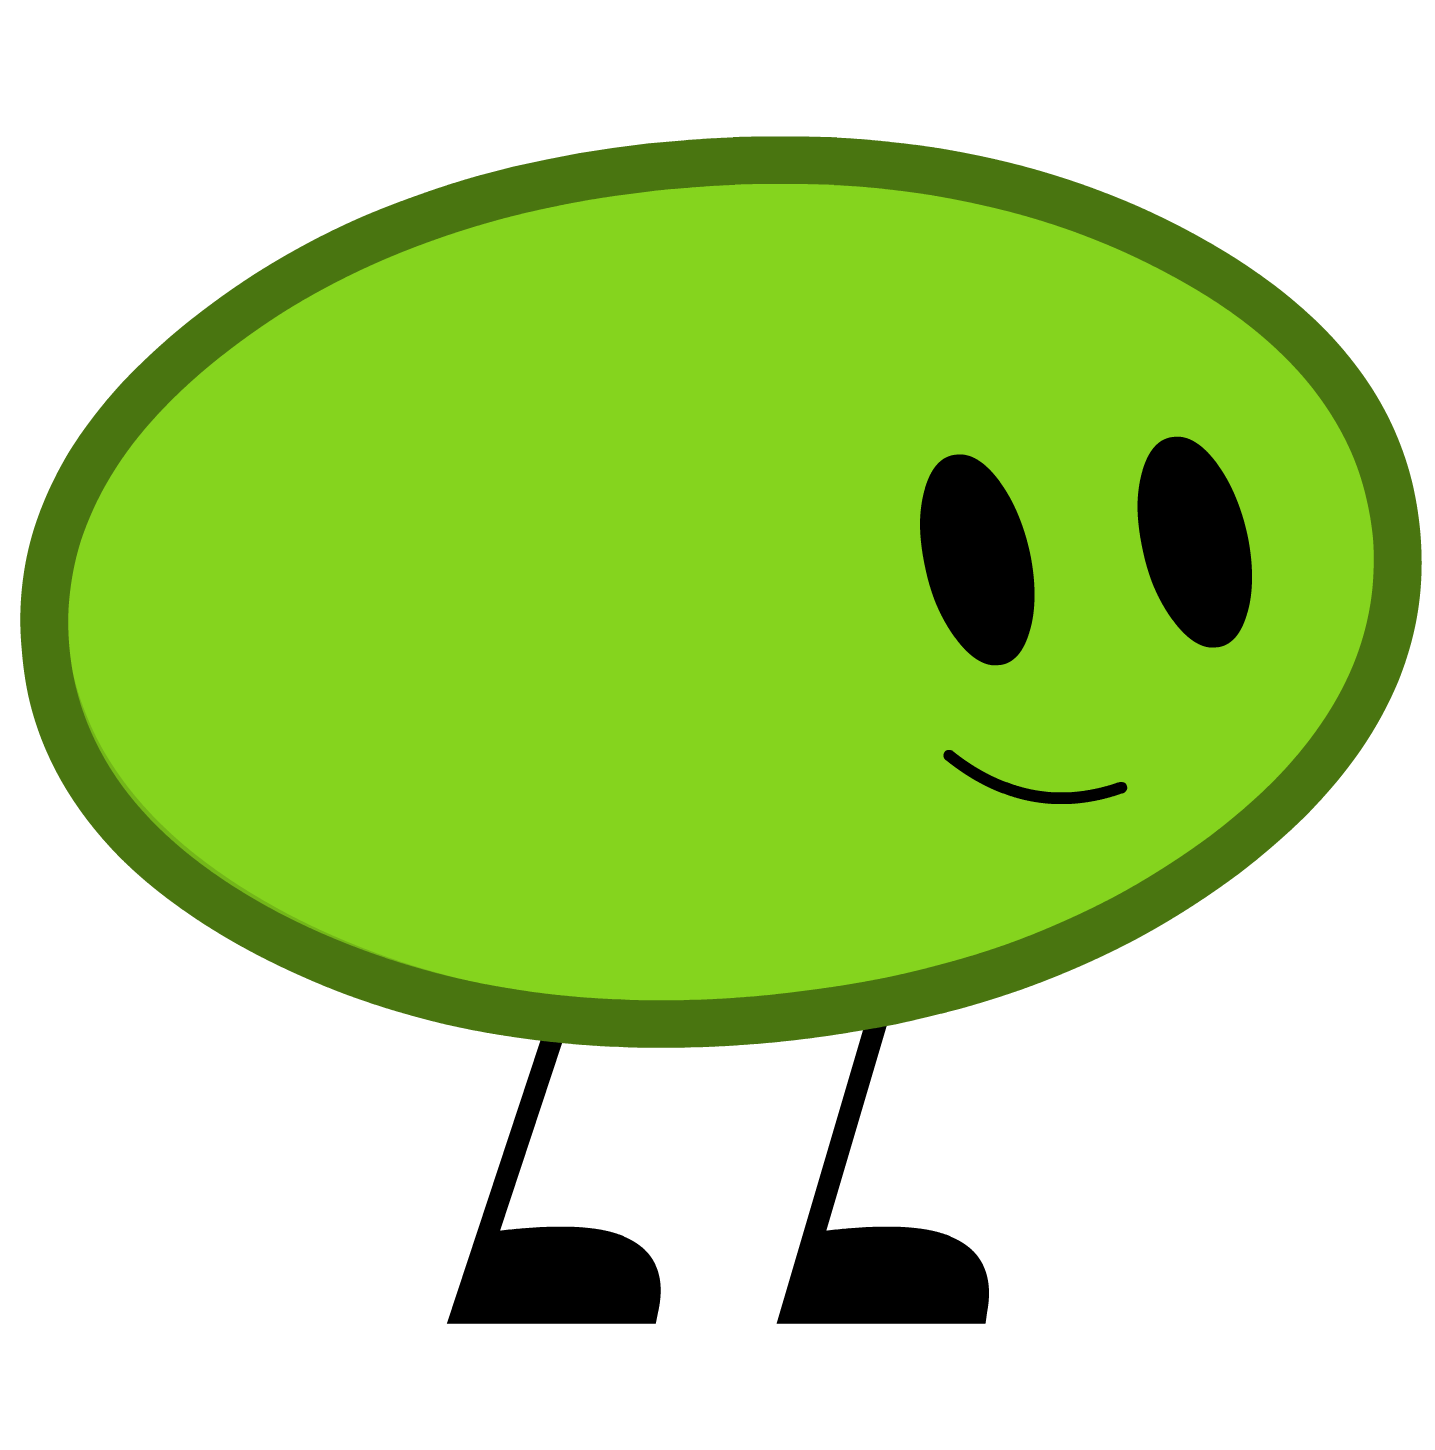 Green Dye, AnimatedGalaxy Wiki